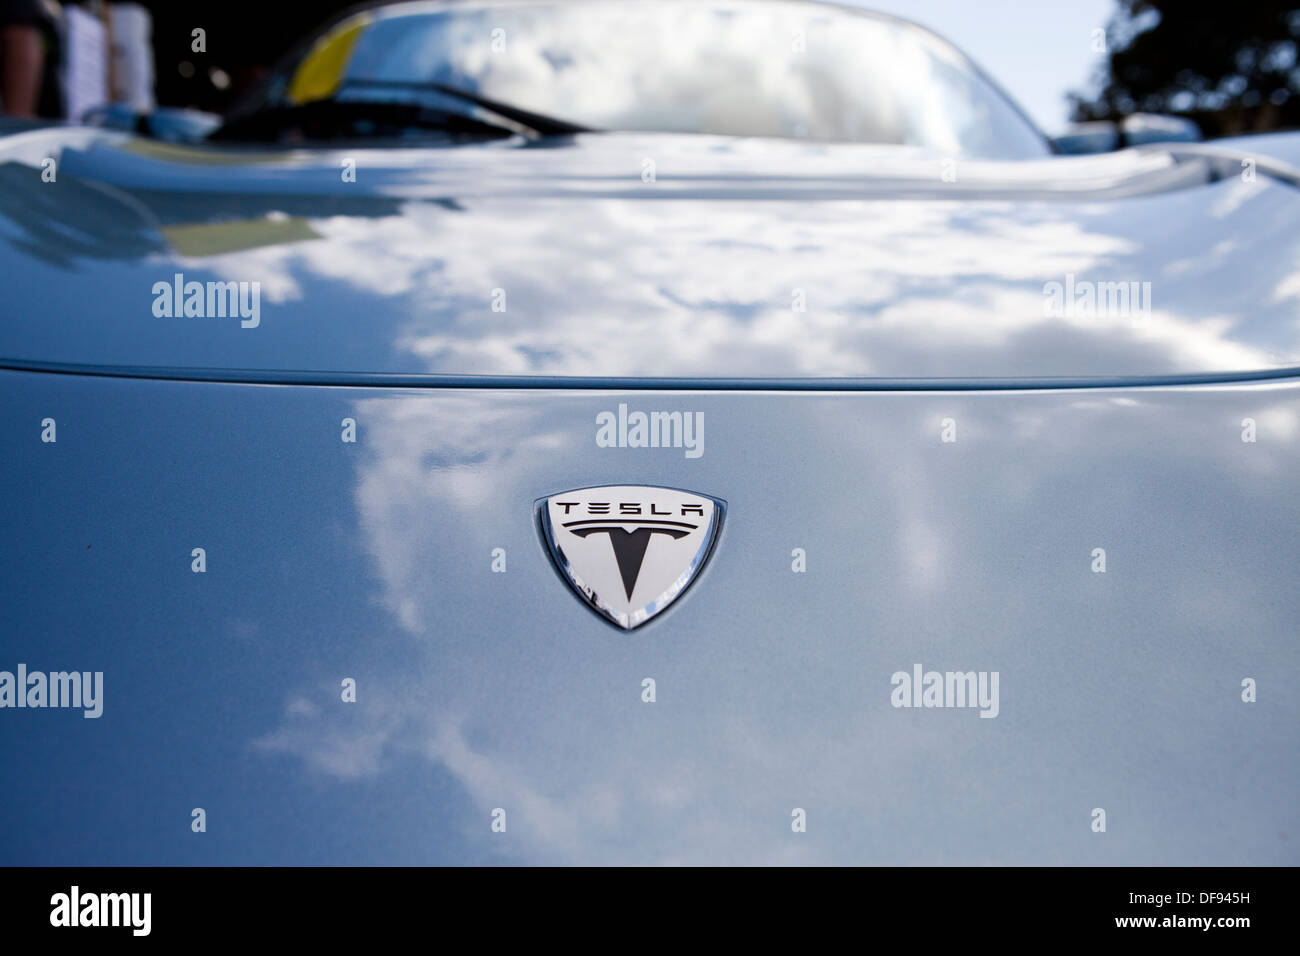 La Tesla Roadster elettrica auto badging cofano Foto Stock